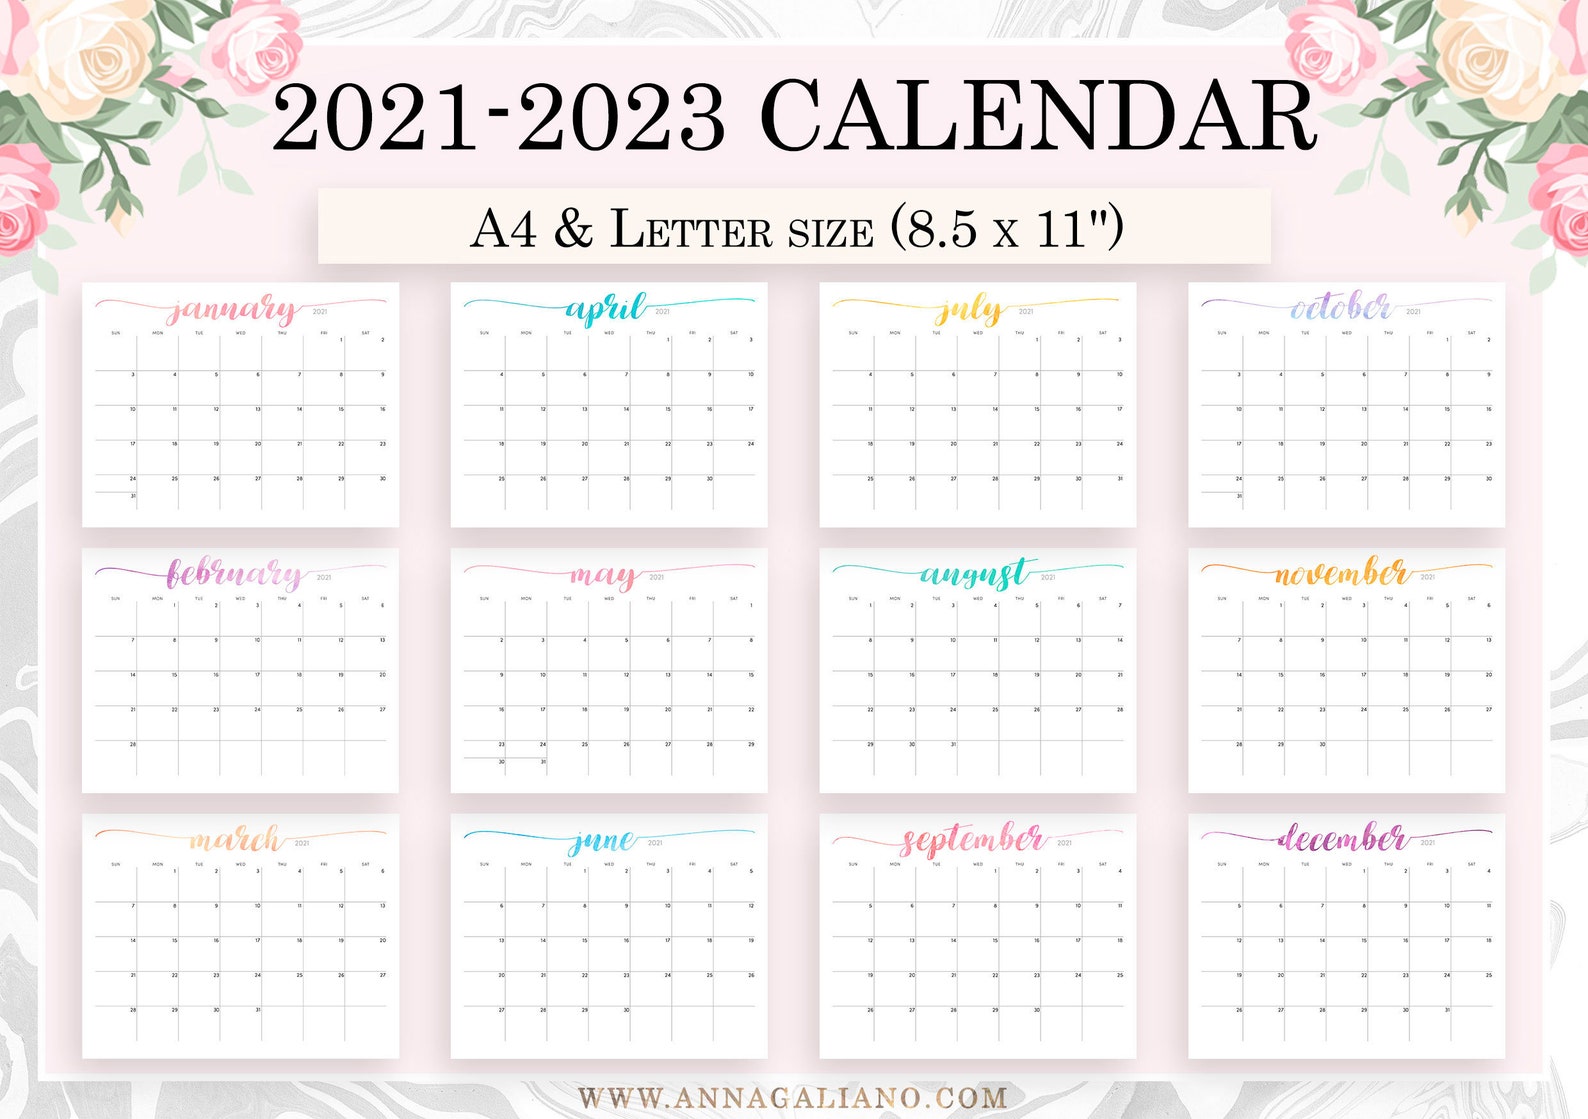 Wall Calendar Printable 2021 2022 2023 Wall Calendar Etsy Images And 